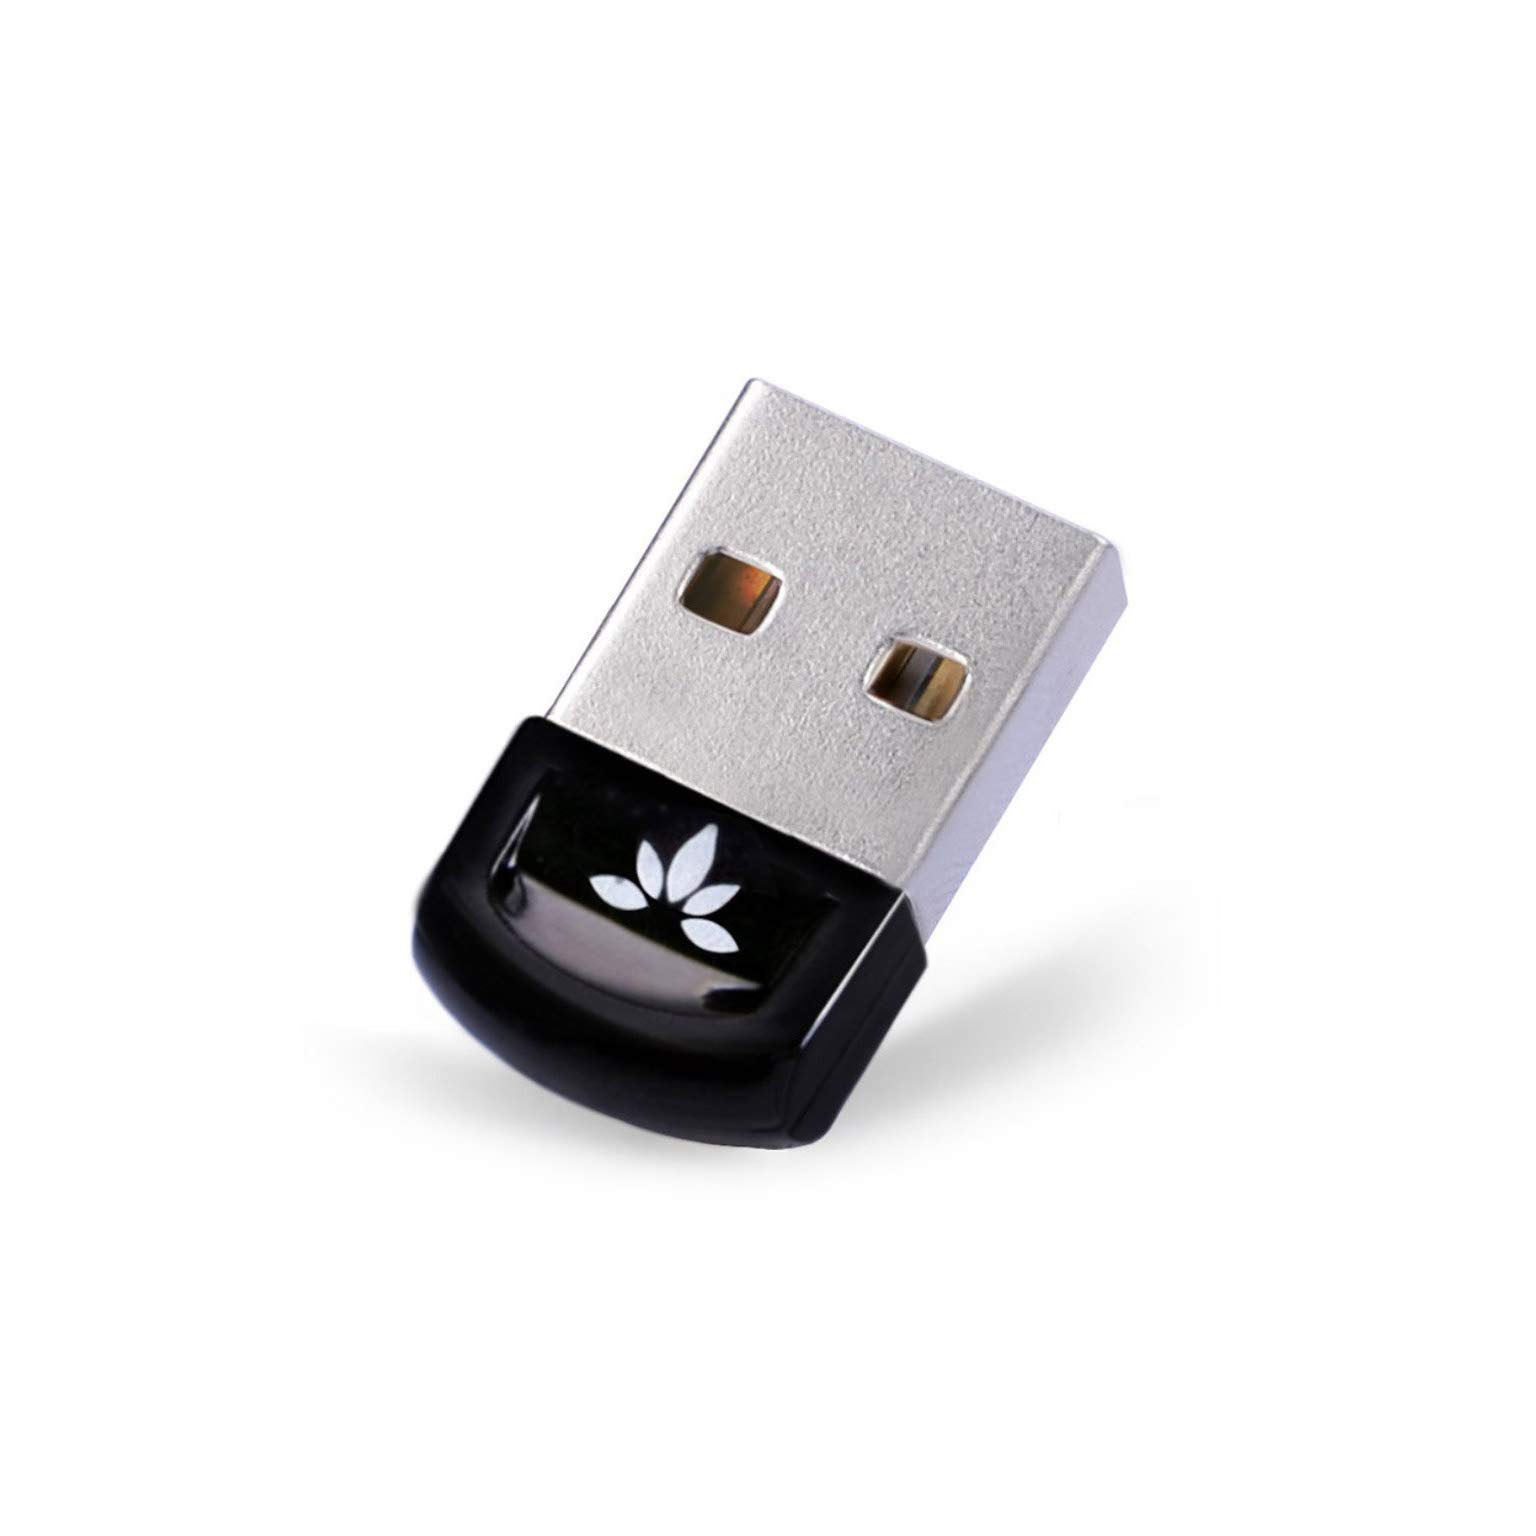 Procent Autonomi Vice USB Bluetooth 4.0 Adapter | Advantage Software